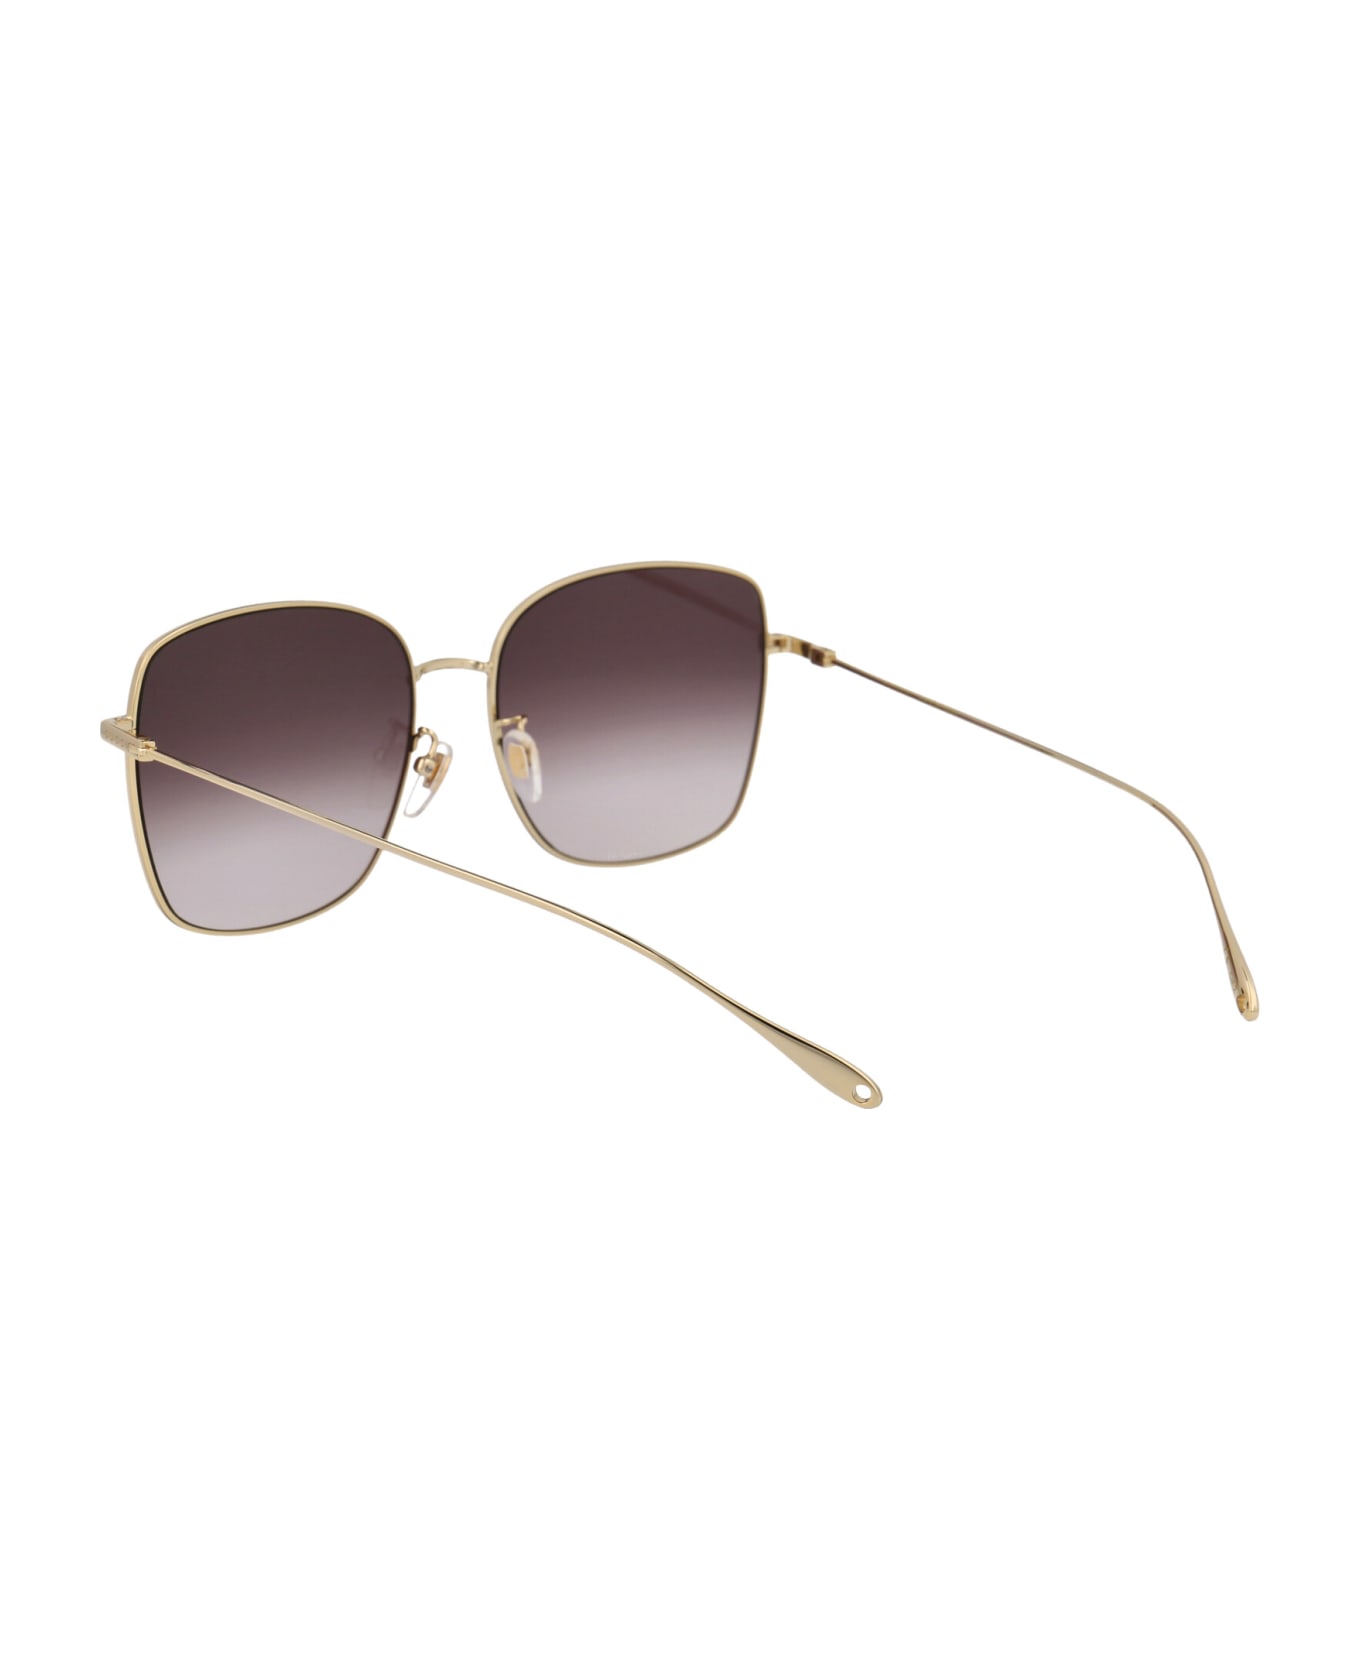 Gucci Eyewear Gg1030sk Sunglasses - 002 GOLD GOLD BROWN